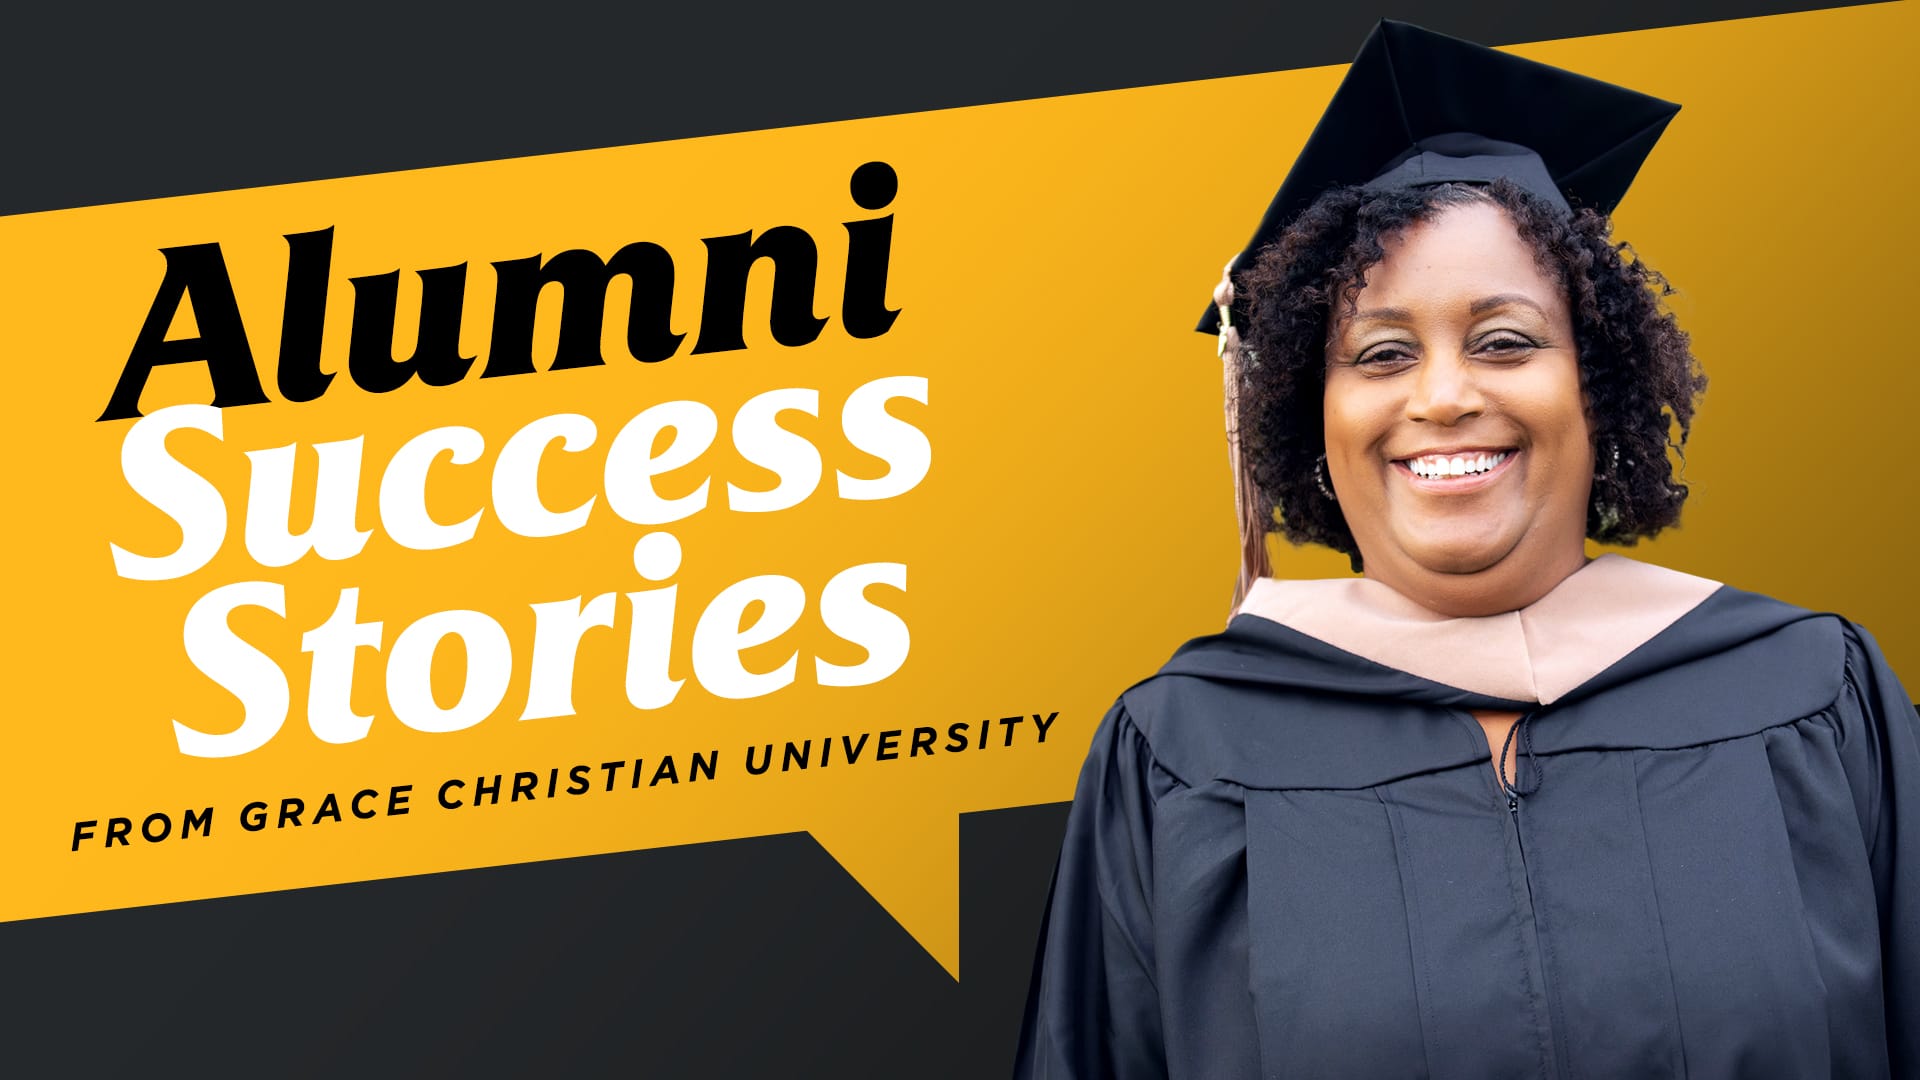 Alumni Success Stories from Grace Christian University